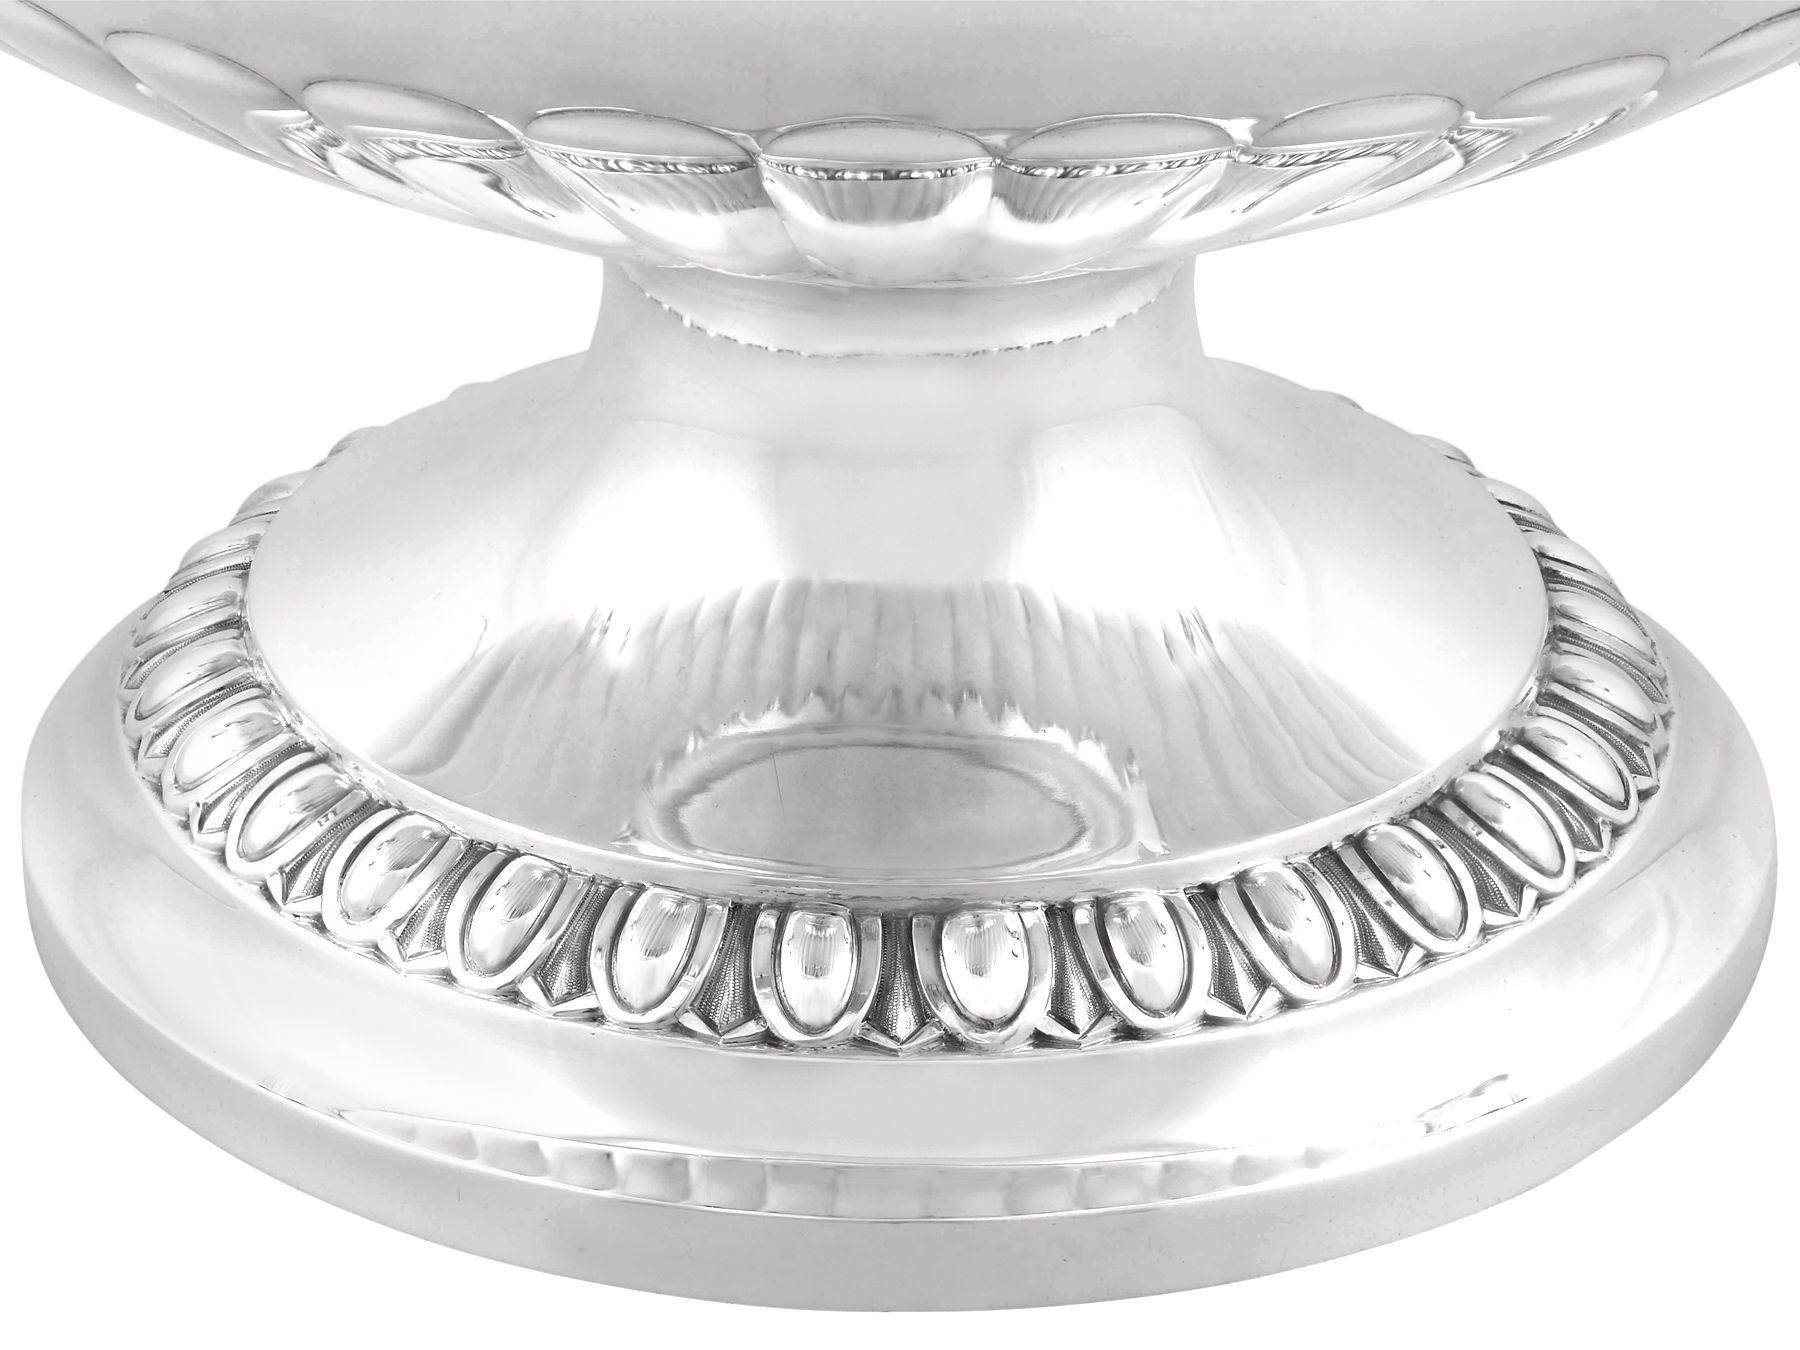 Antique Victorian 1899 Sterling Silver Presentation Bowl For Sale 4